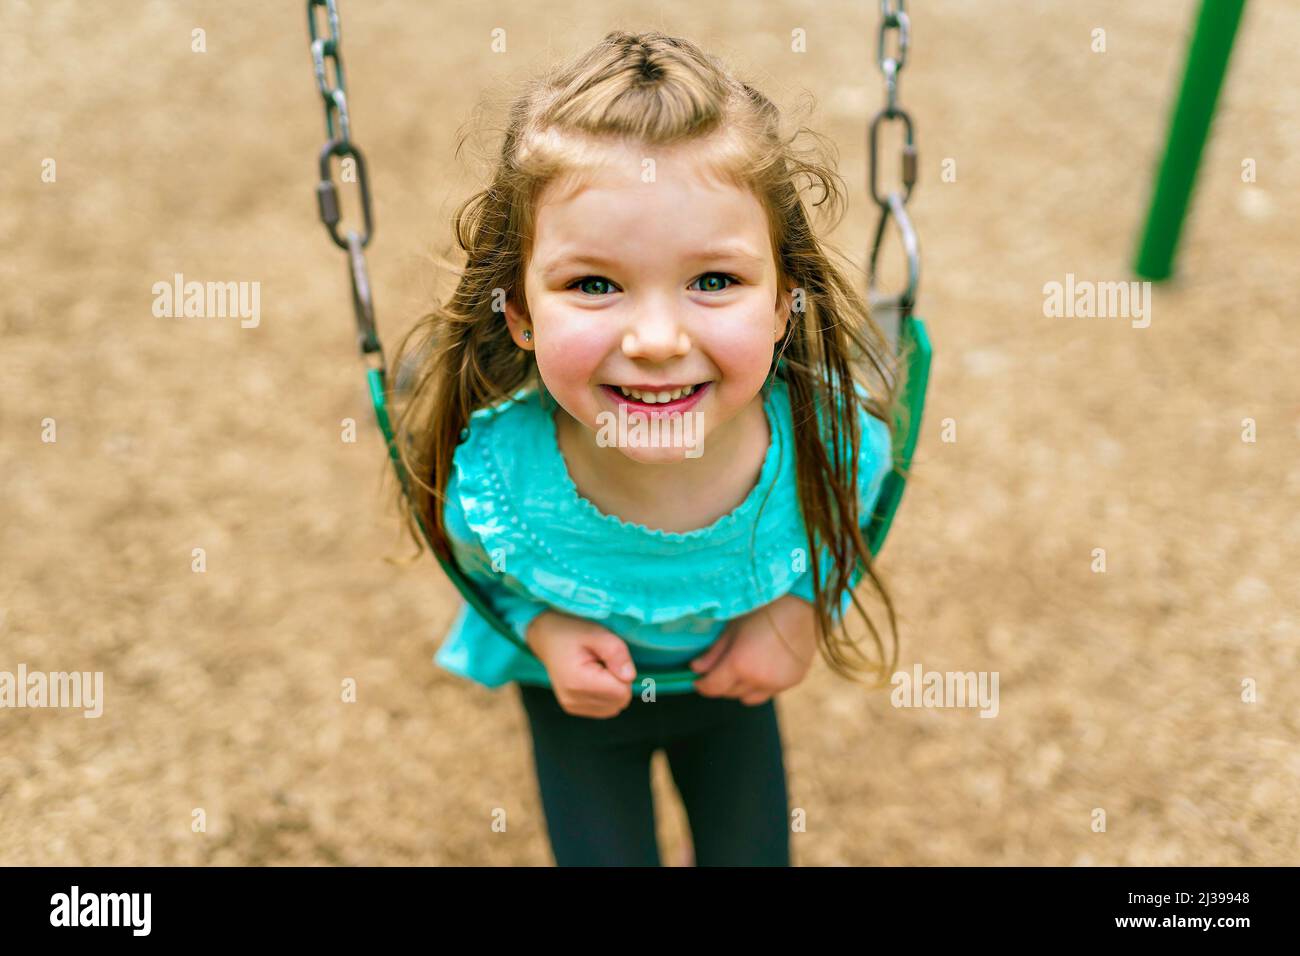 Happy little girl is playground having fun on swing Stock Photo